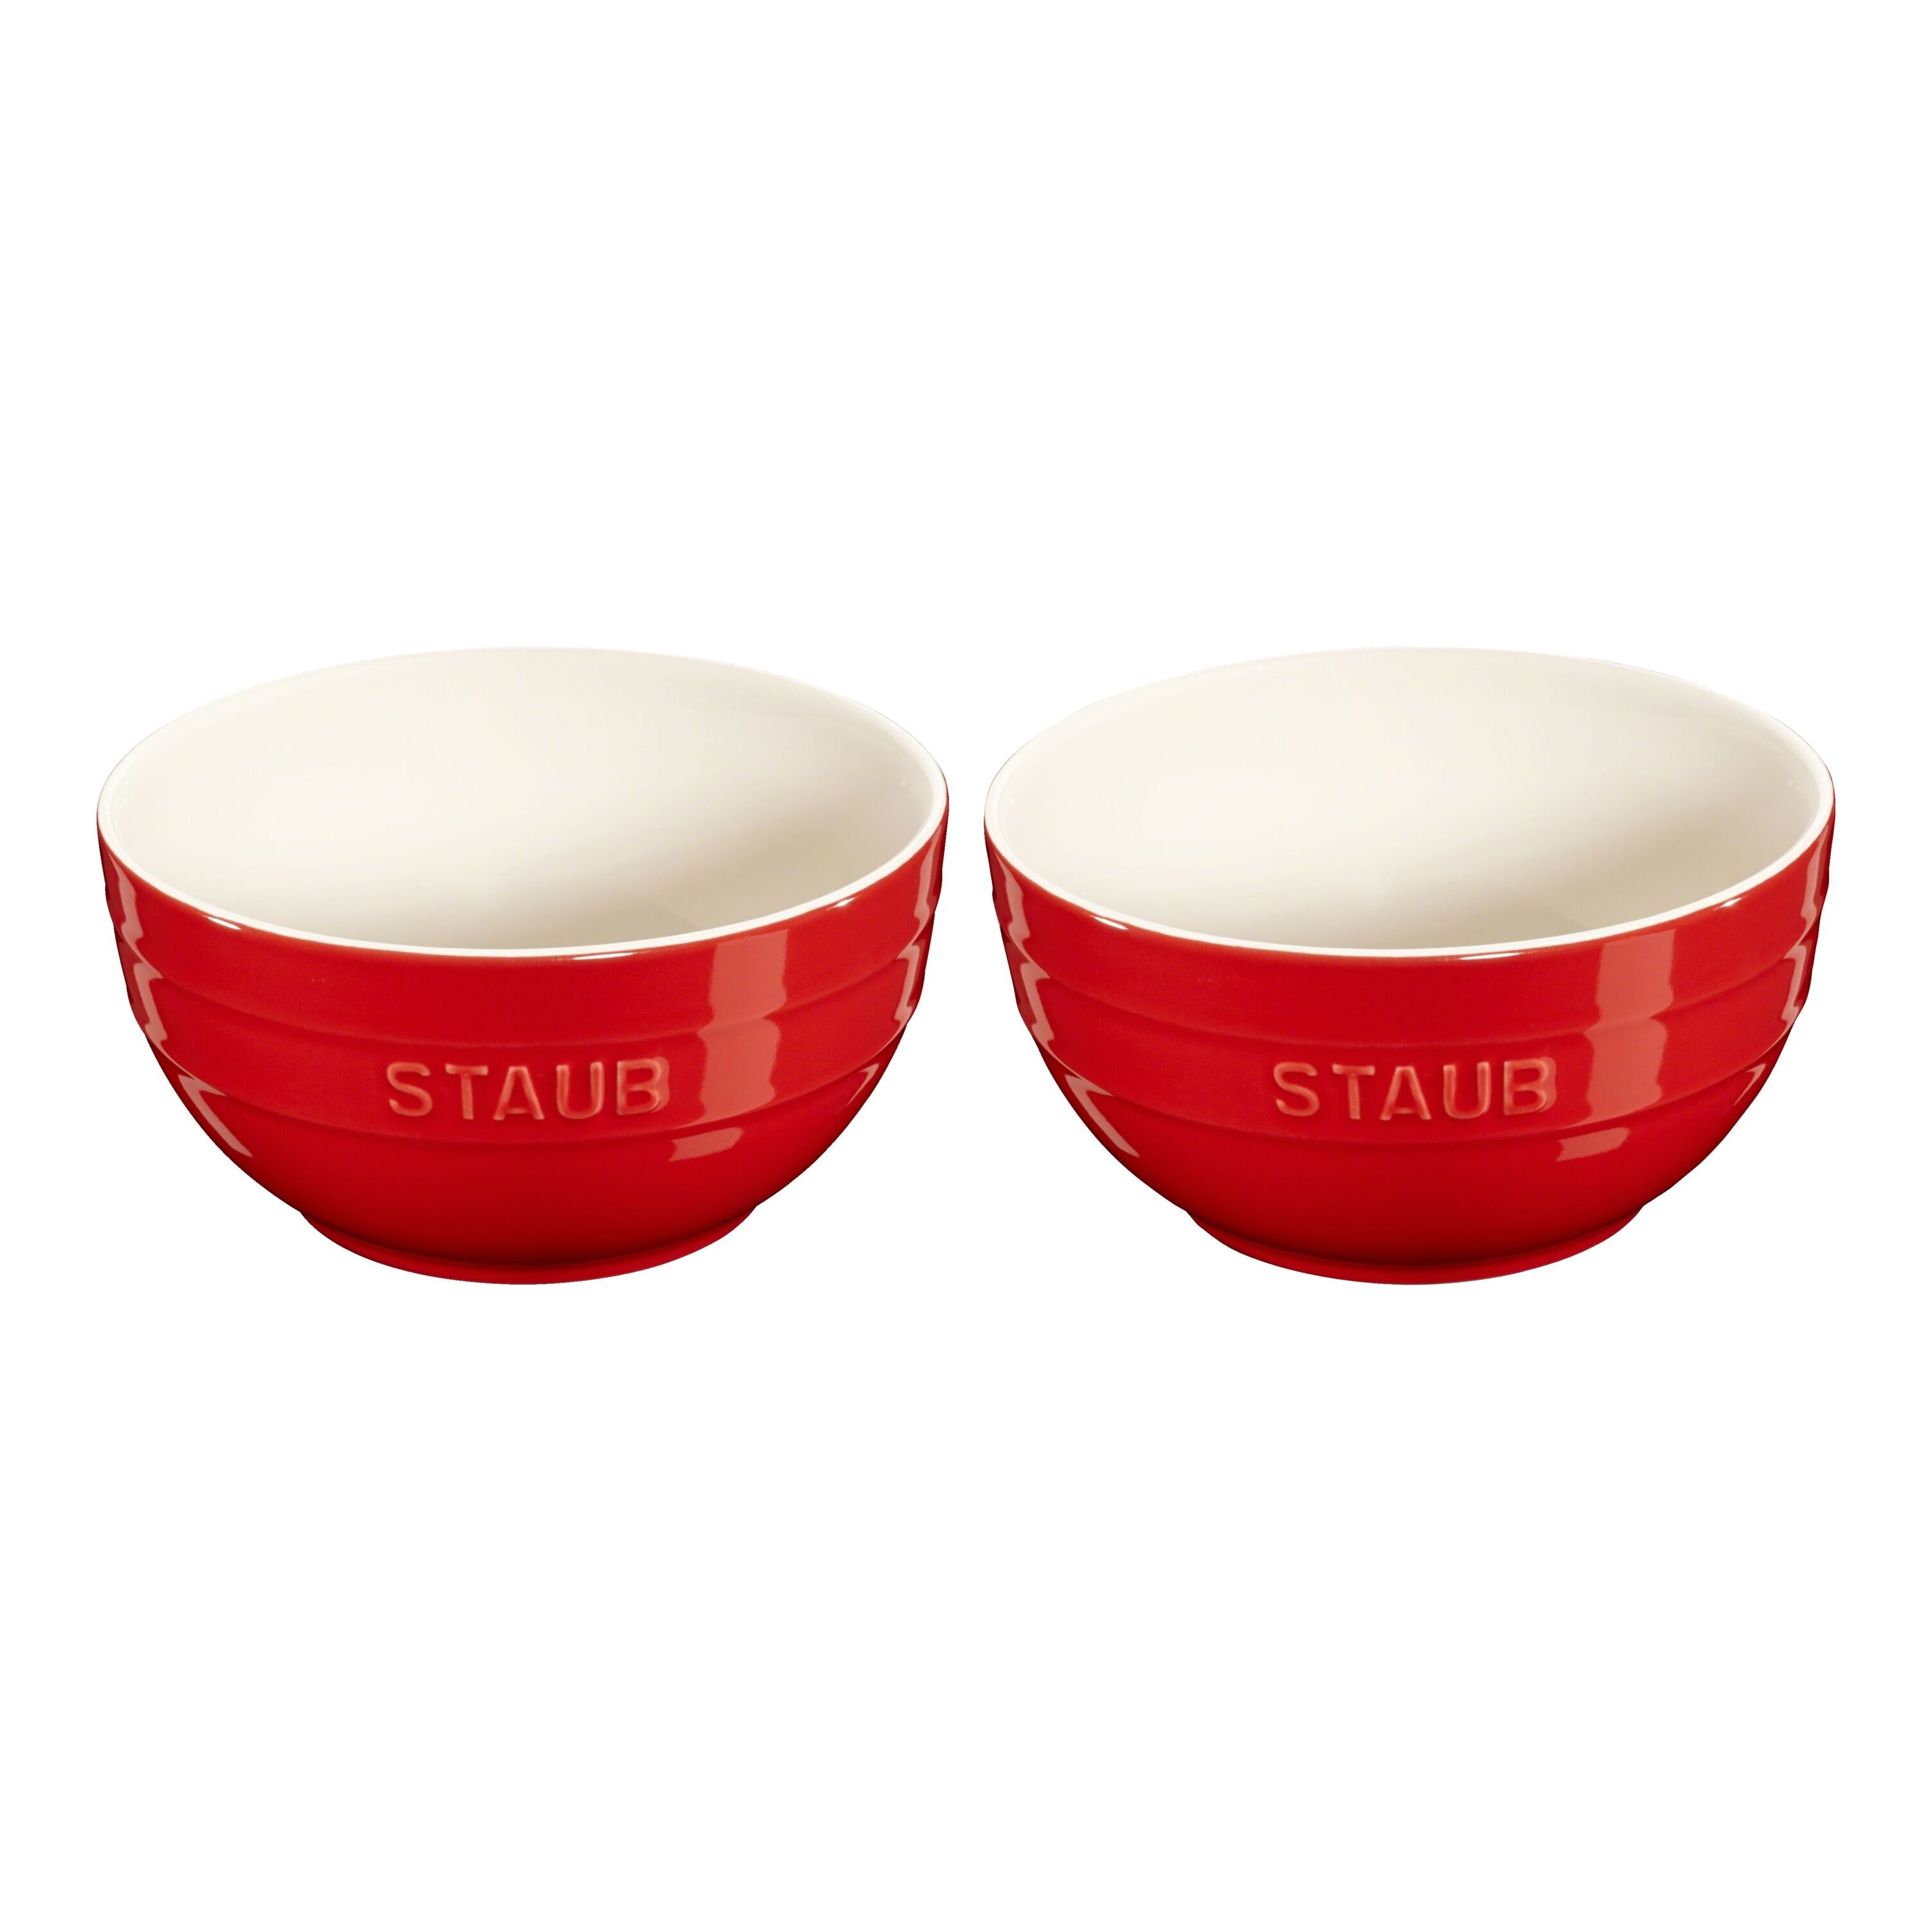 Staub Ceramic - Bowls & Ramekins 2-pc, Large Universal Bowl Set, Cherry